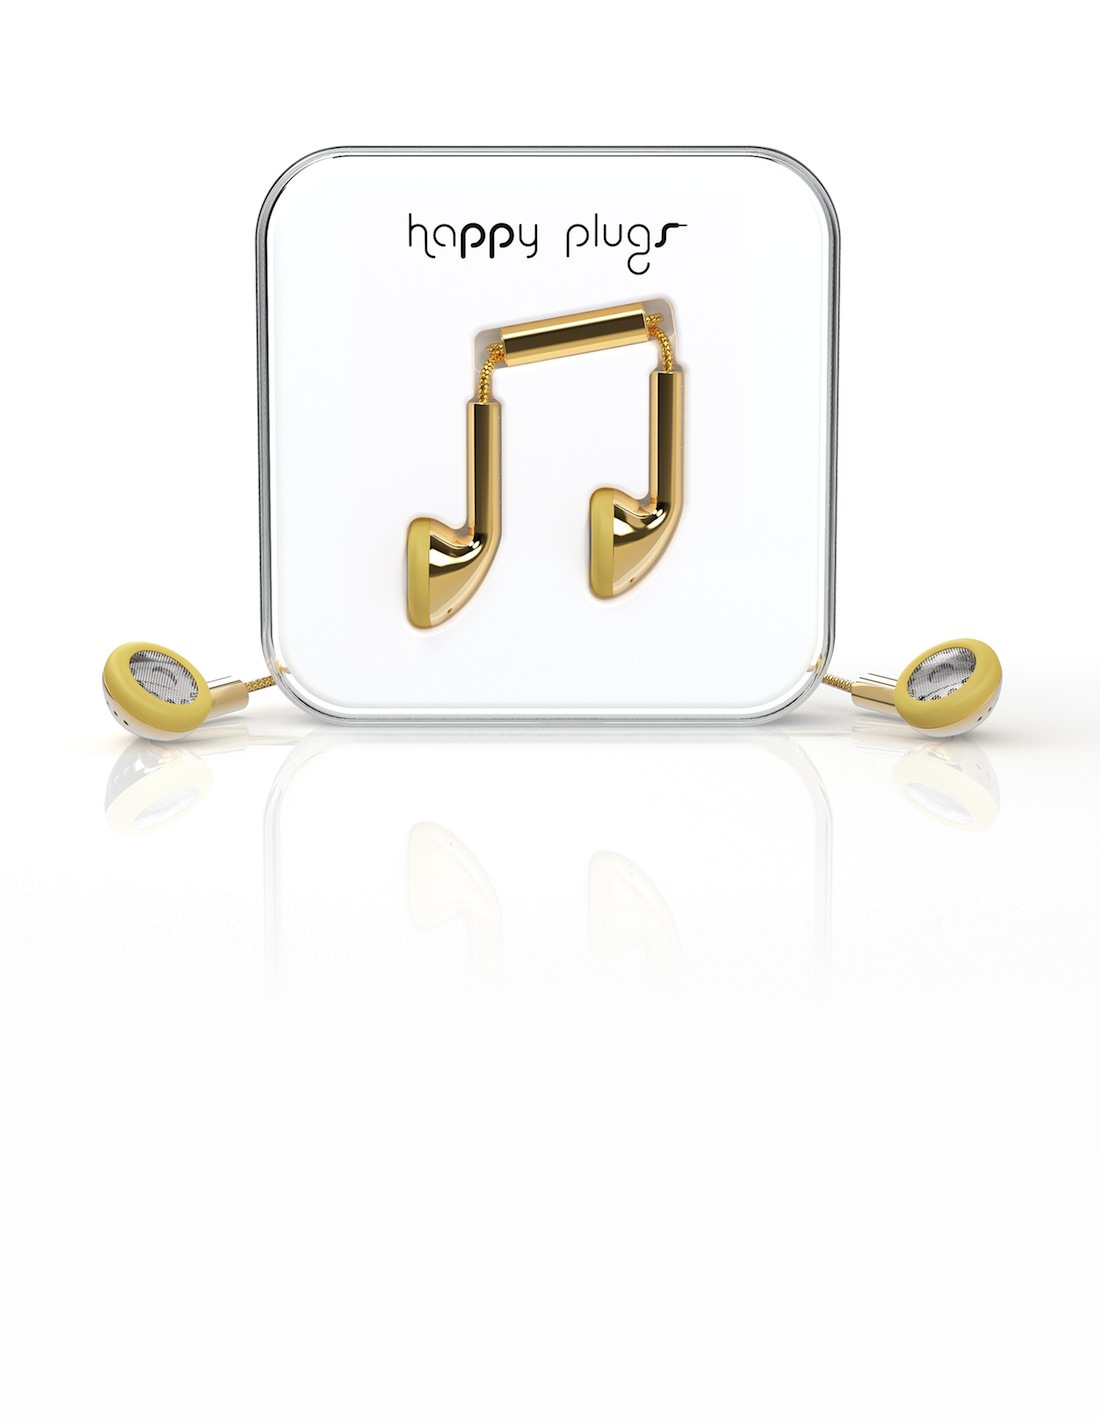 happy plugs gold